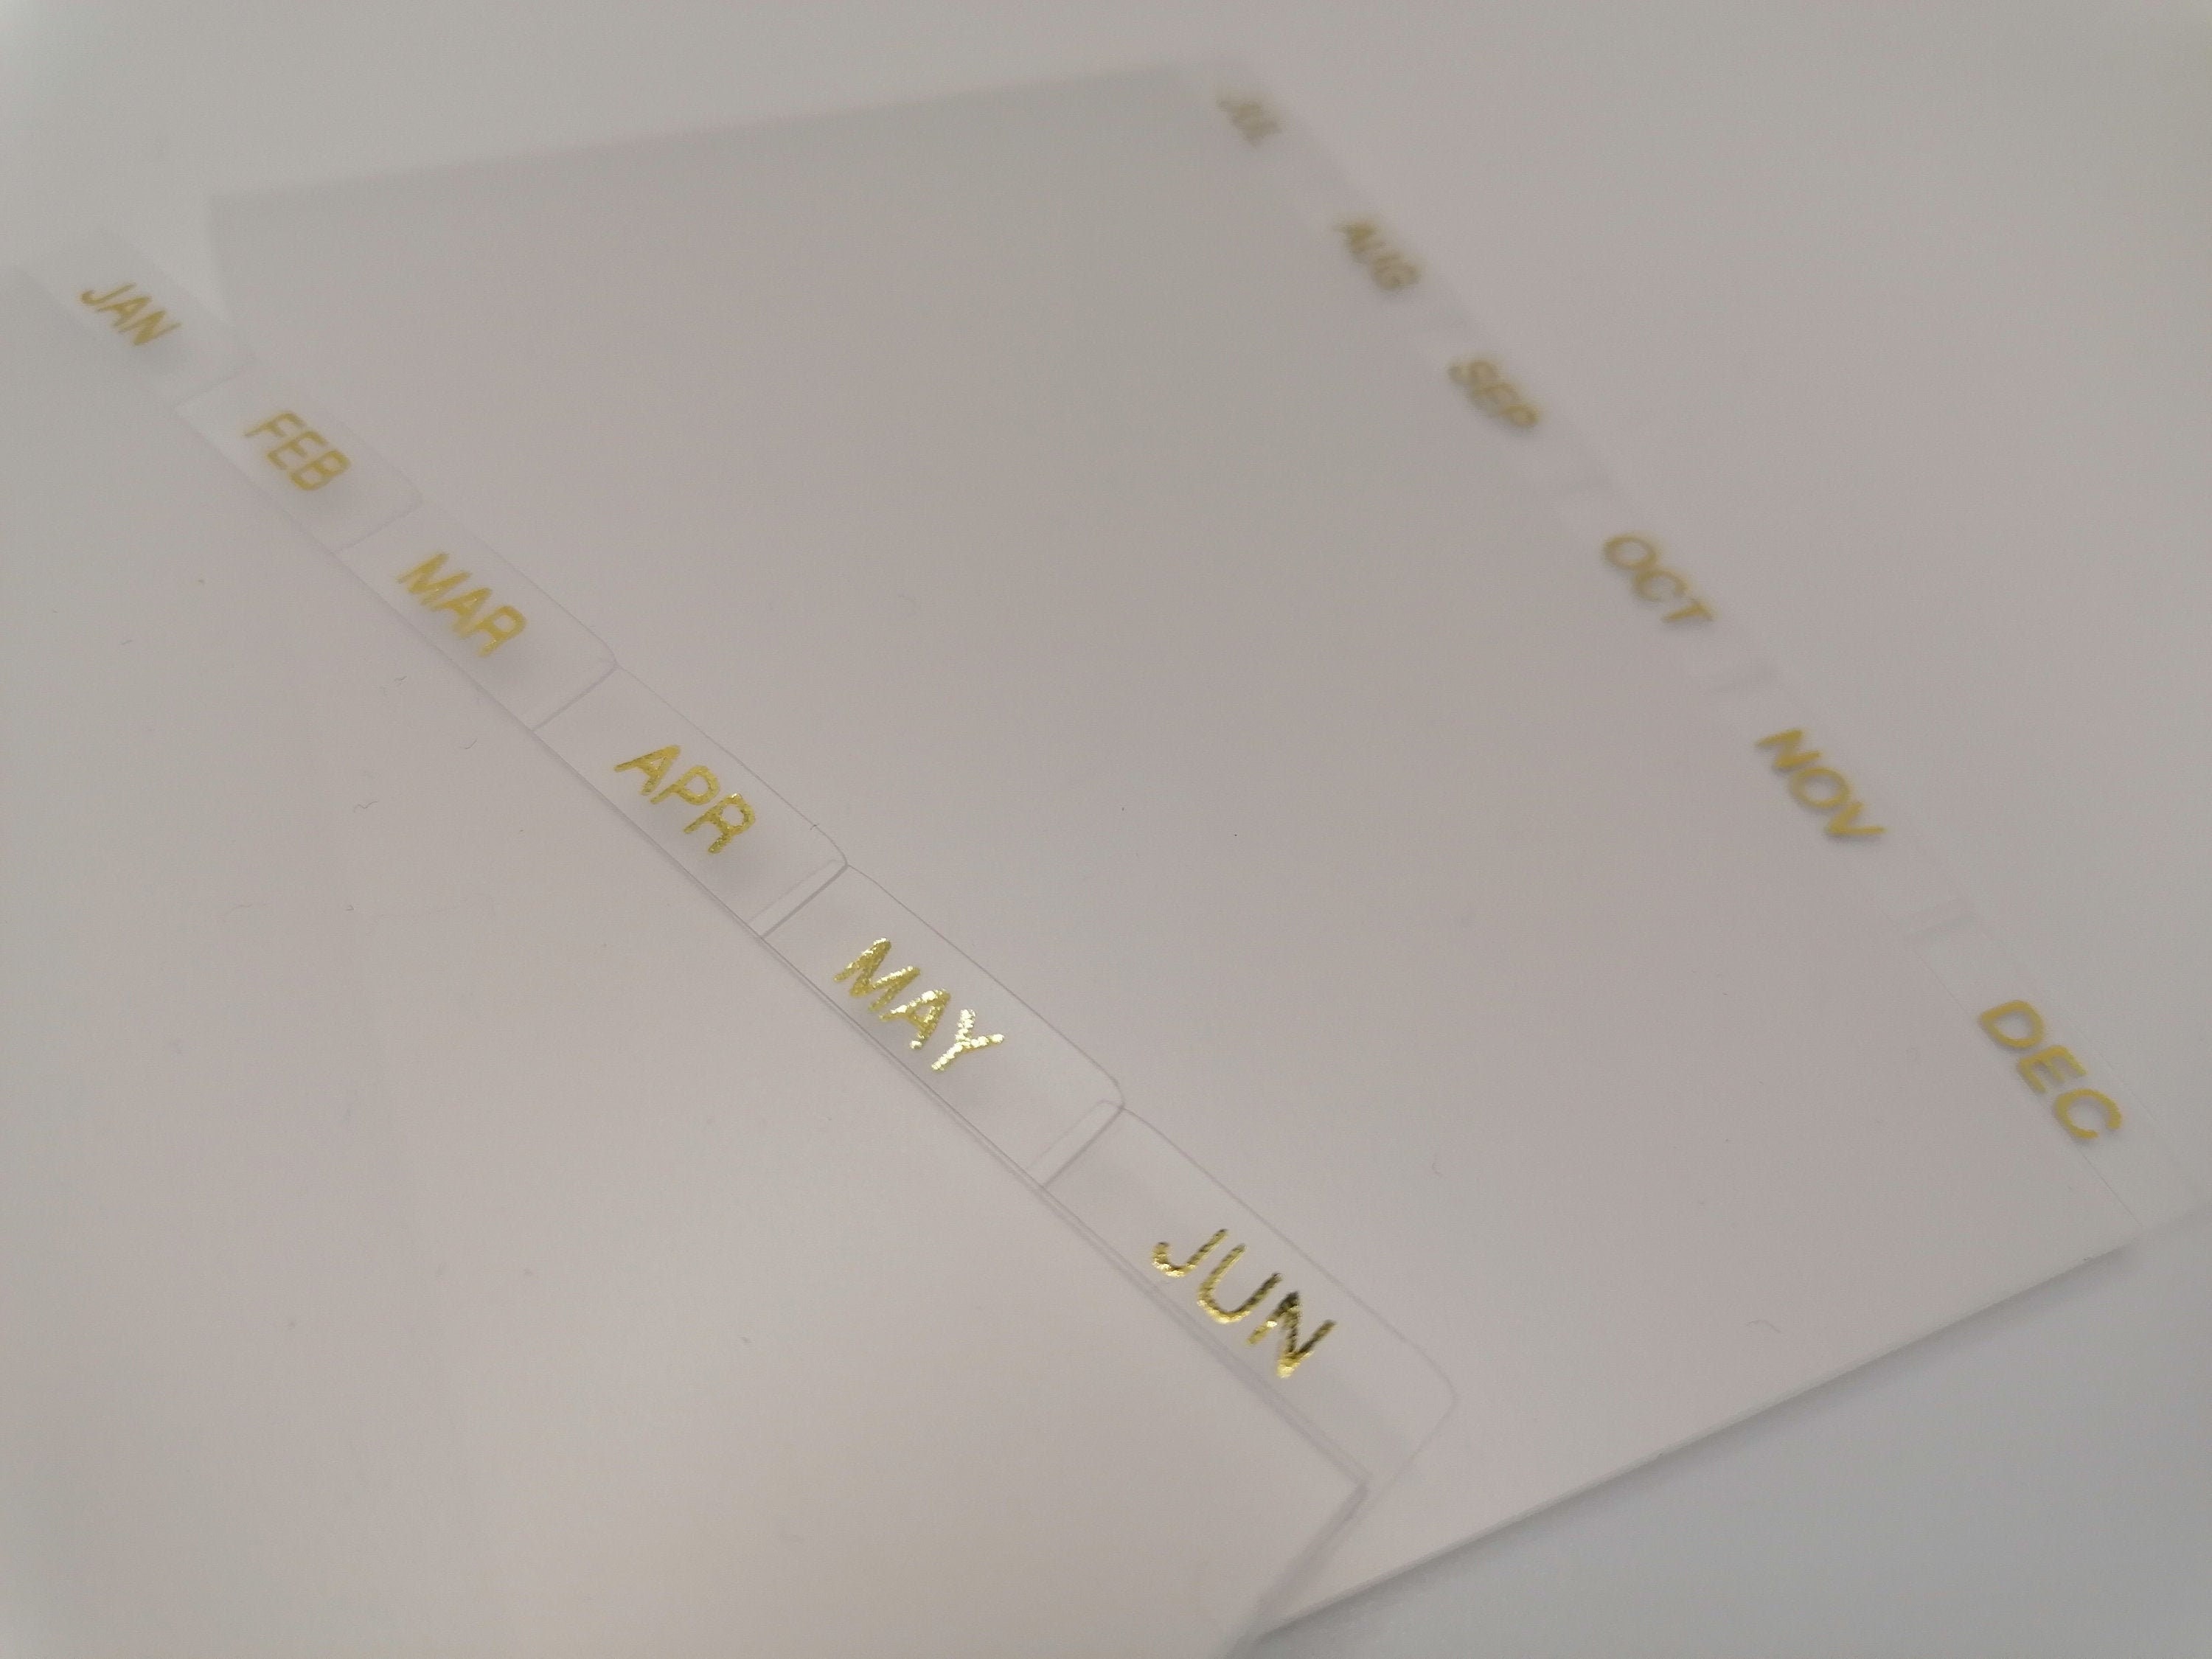 fits Louis Vuitton PM Small LV Agenda: Planner Refill Paper +Pouch + Insert  Pen